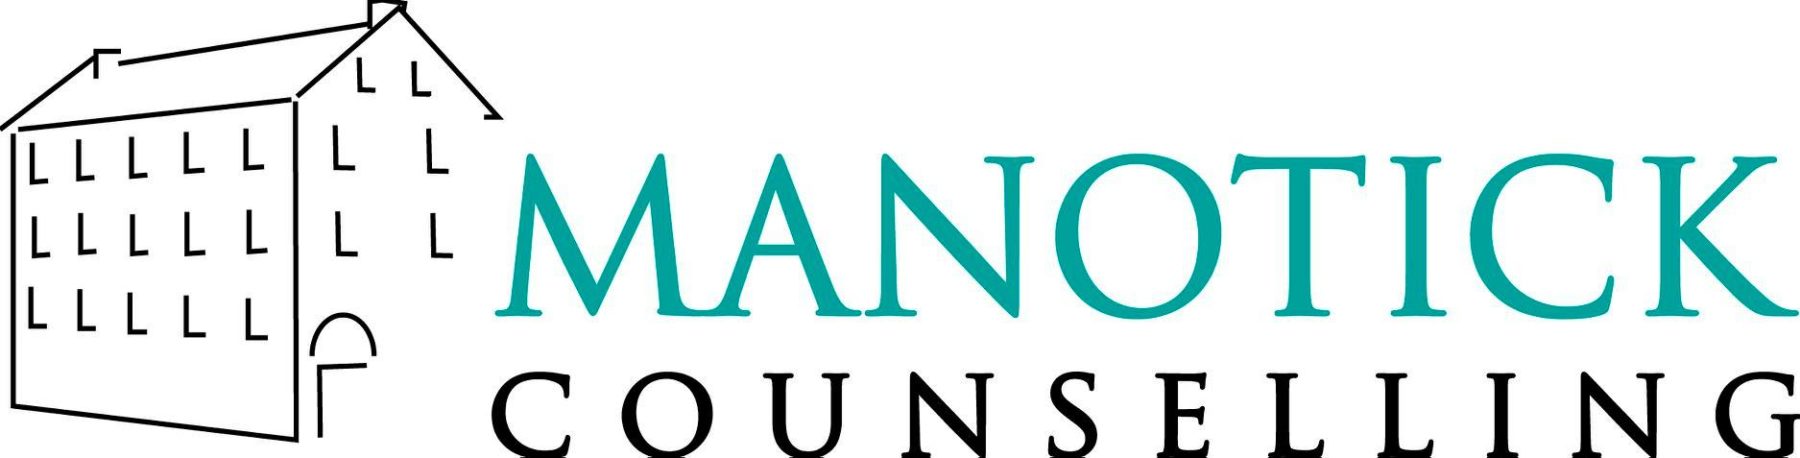 Manotick Counselling logo